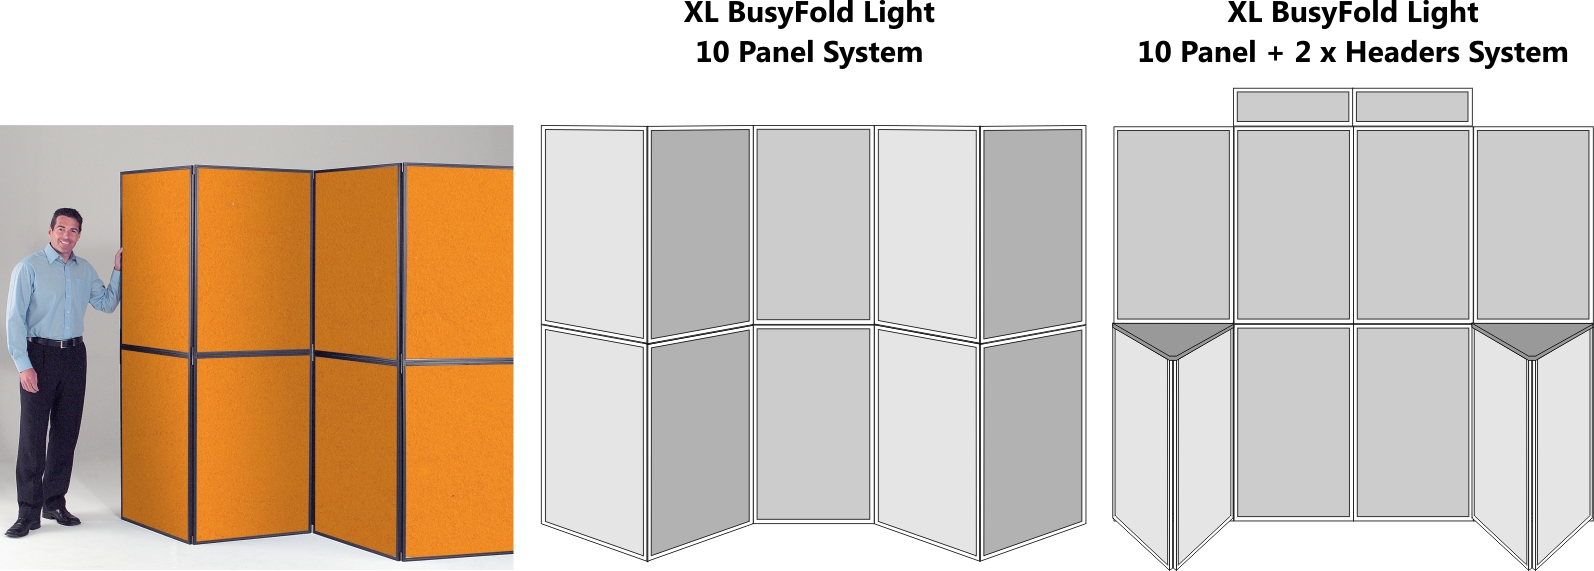 XL BusyFold Light 10 Panel Display System